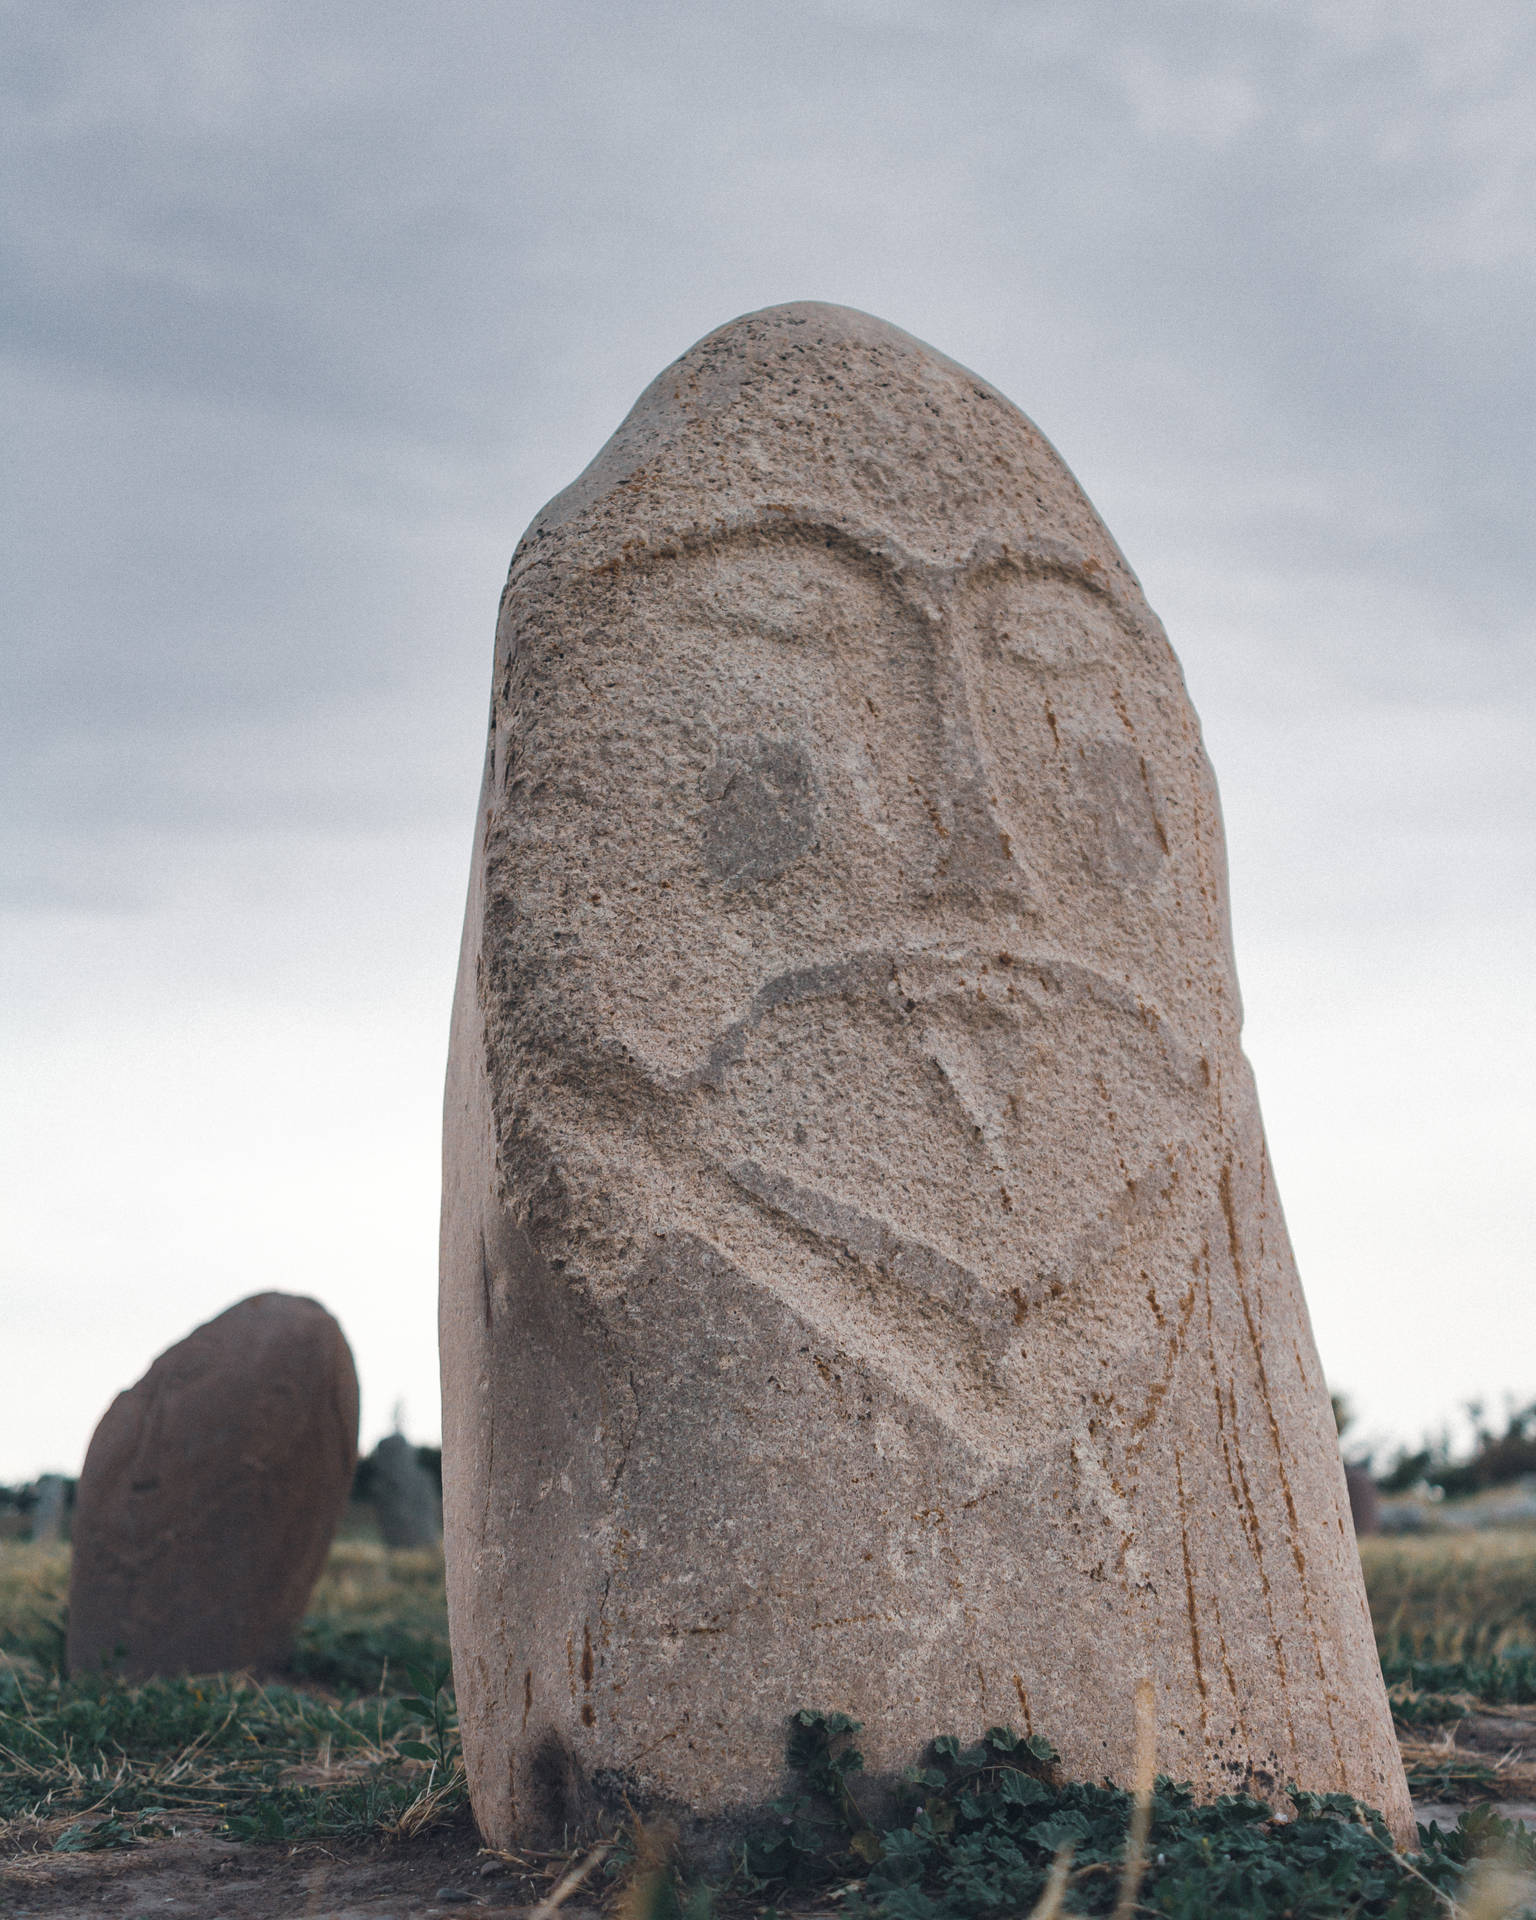 Kyrgyzstan Balbal Stone Statue Background